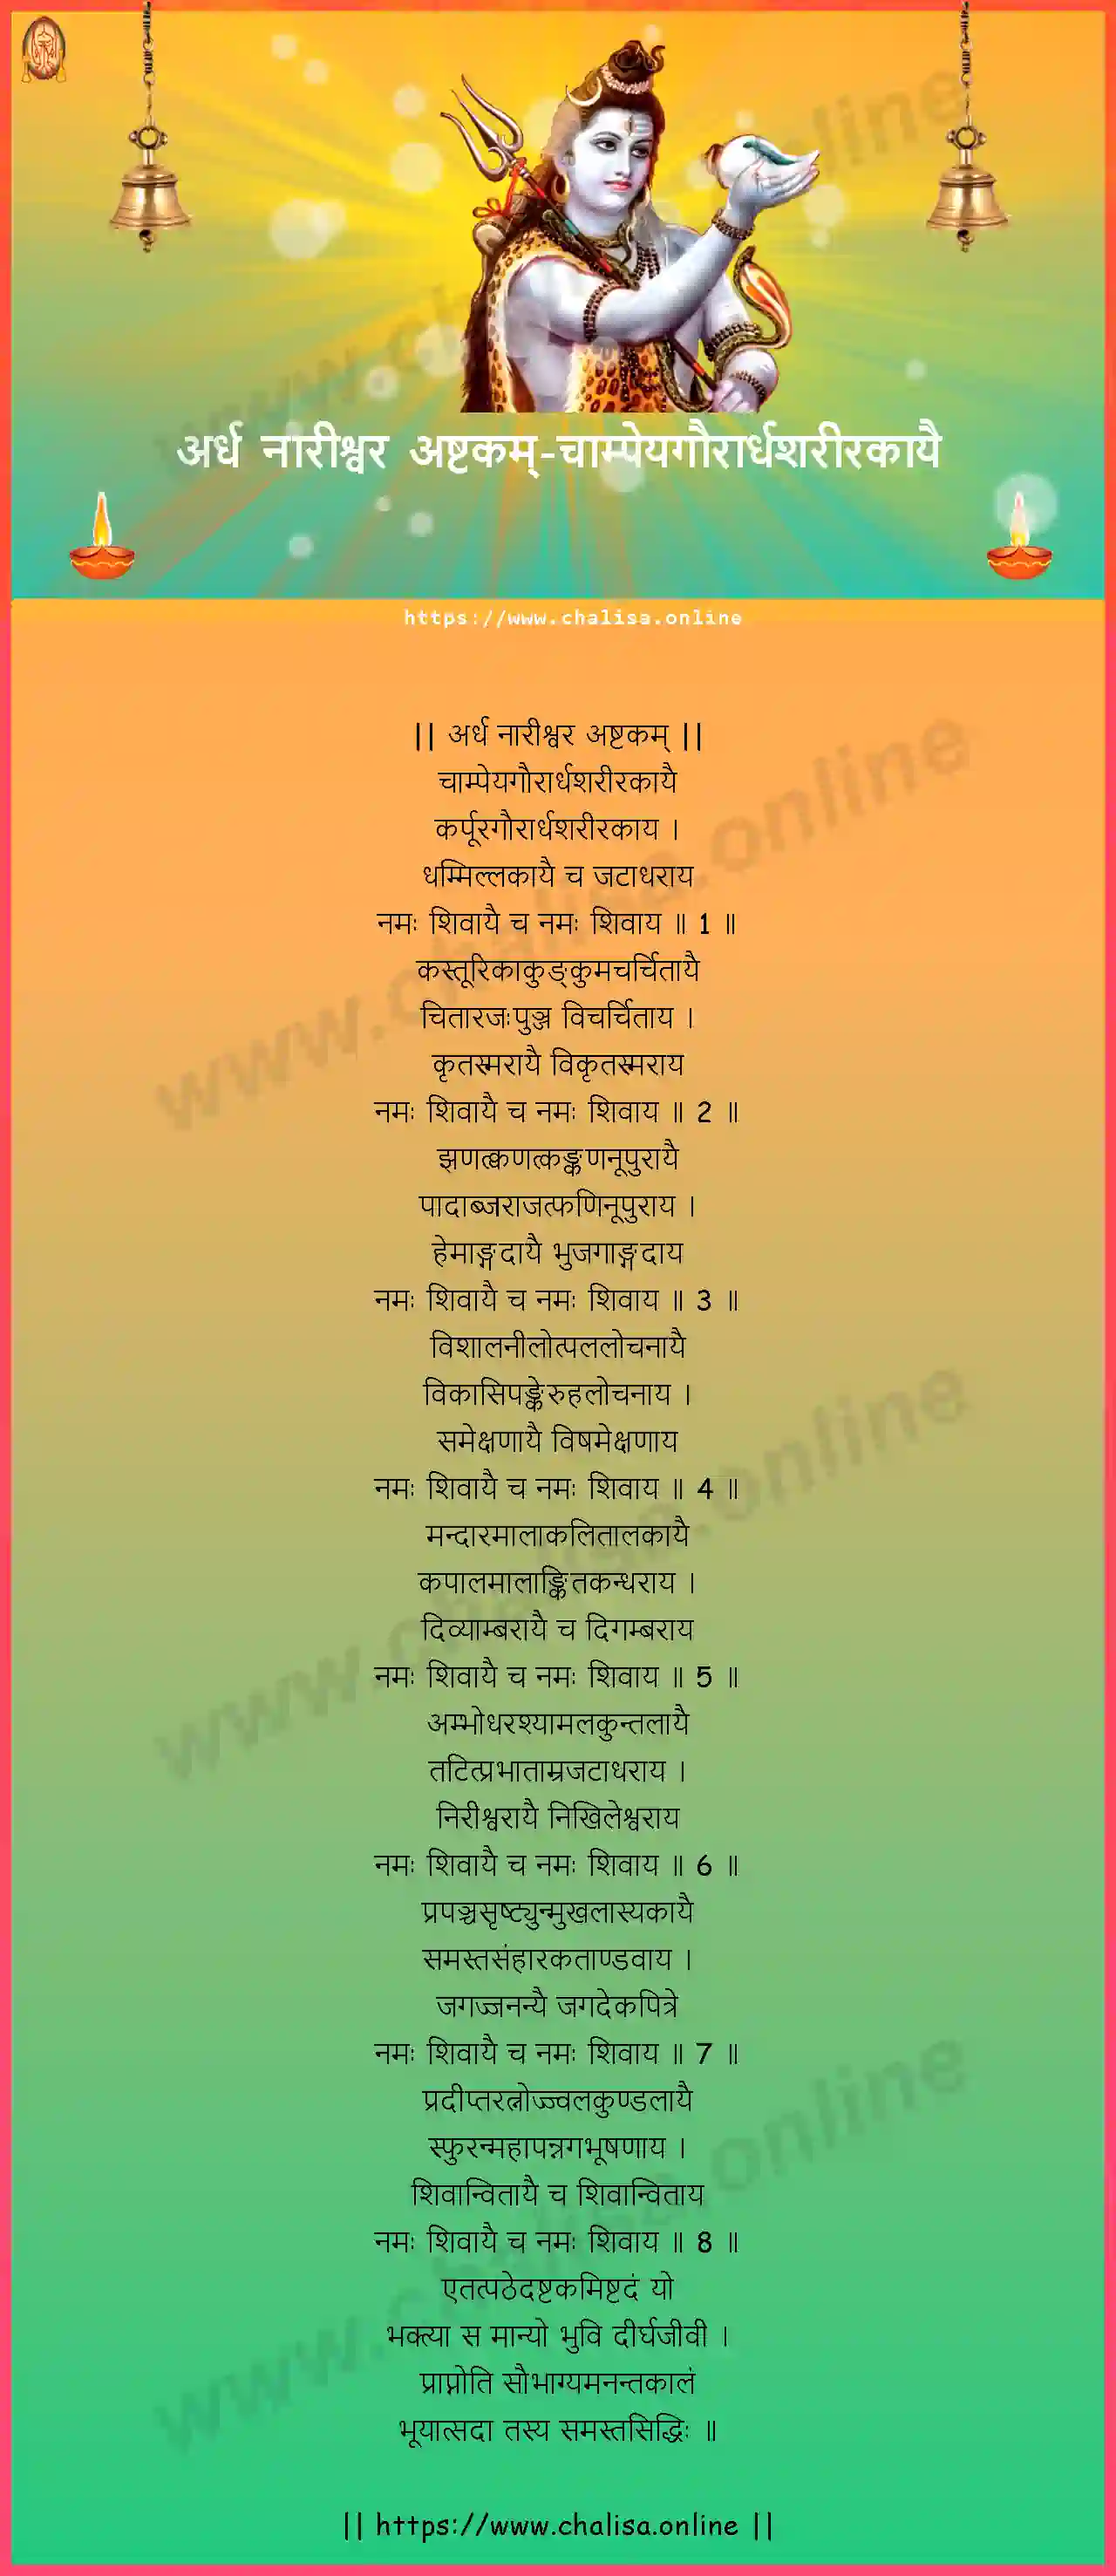 champeyagaurardhasarirakayai-ardha-naareeswara-ashtakam-devanagari-devanagari-lyrics-download